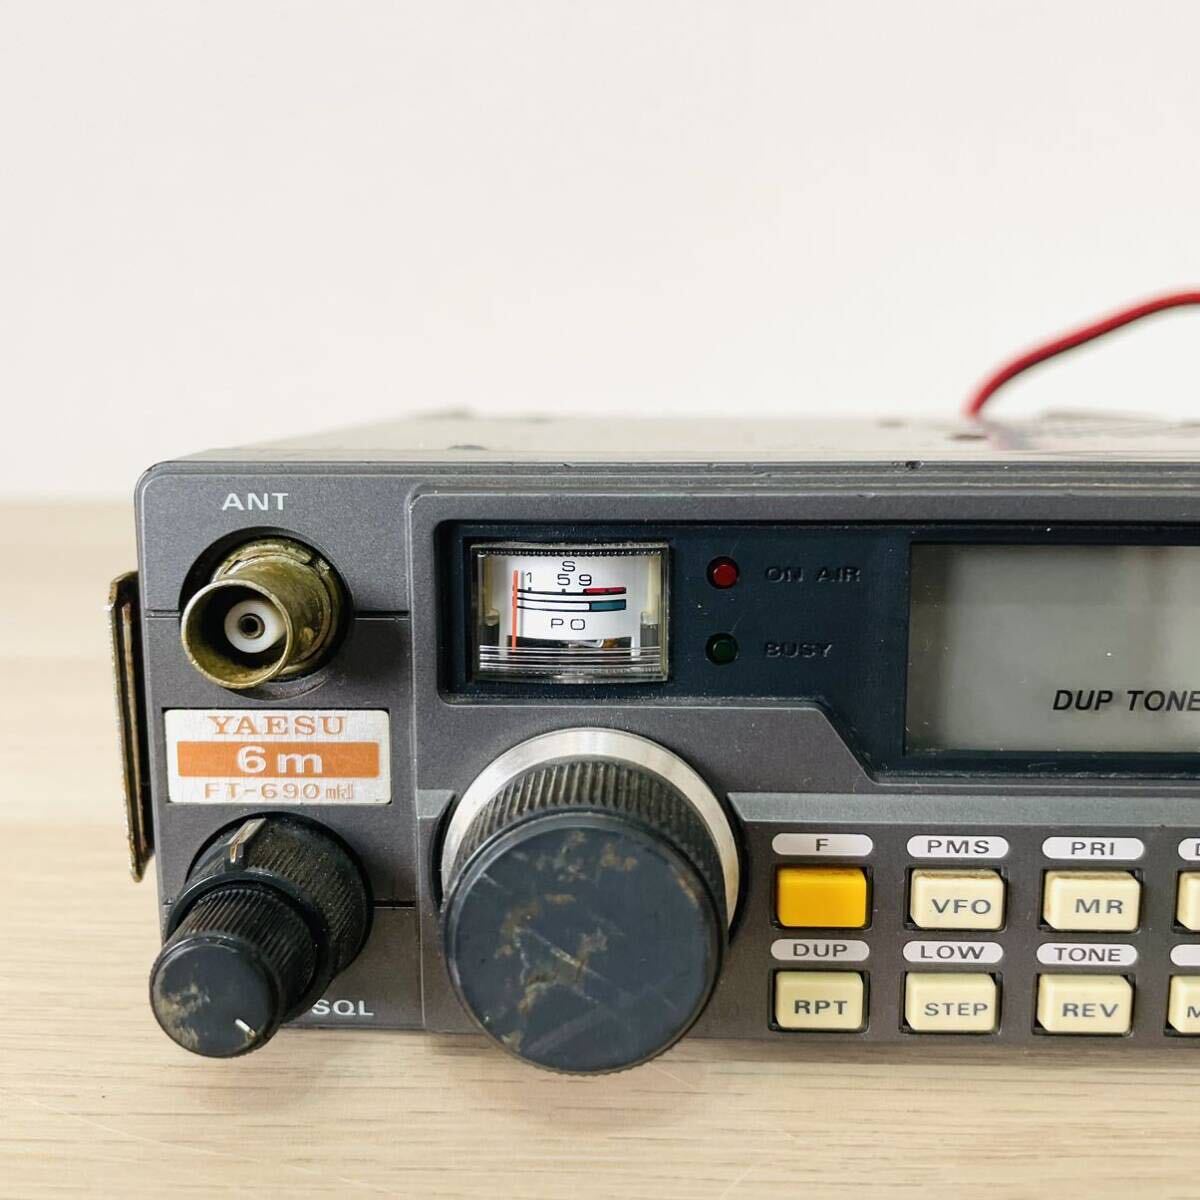 YAESU FT-690 mk2 amateur radio all mode transceiver Yaesu wireless 